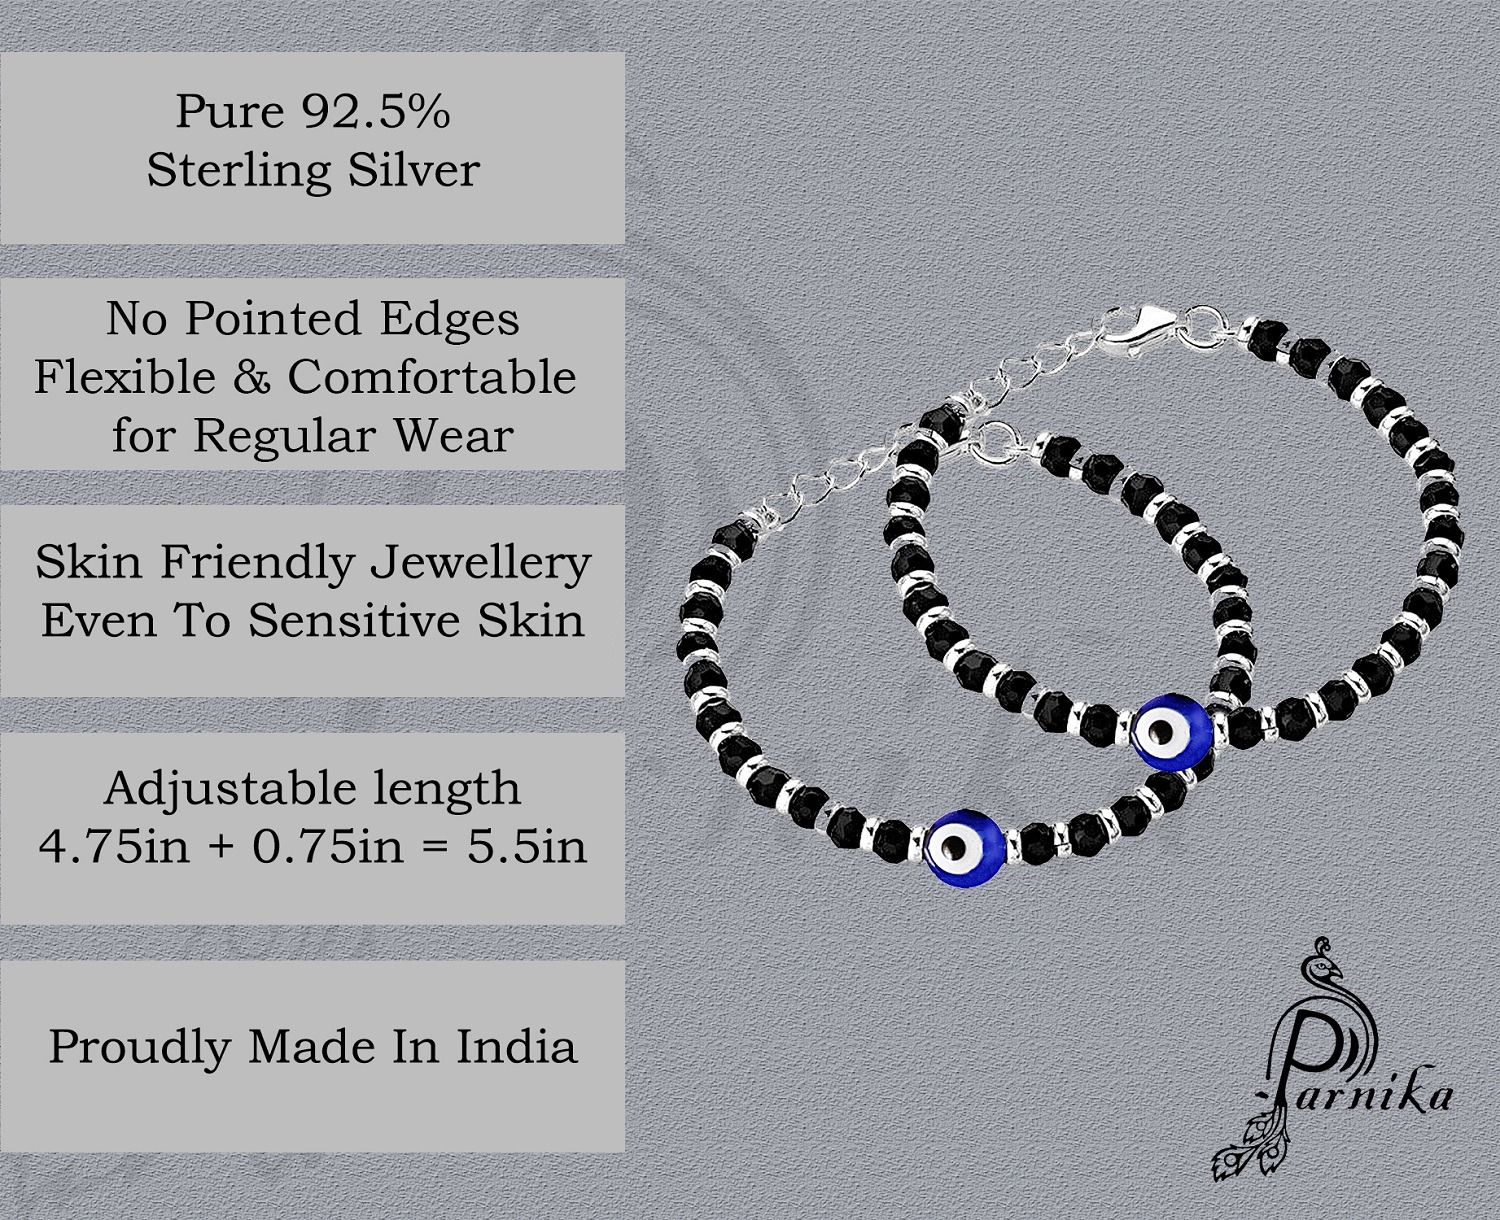 Buy Designs Online | BlueStone.com - India's #1 Online Jewellery Brand